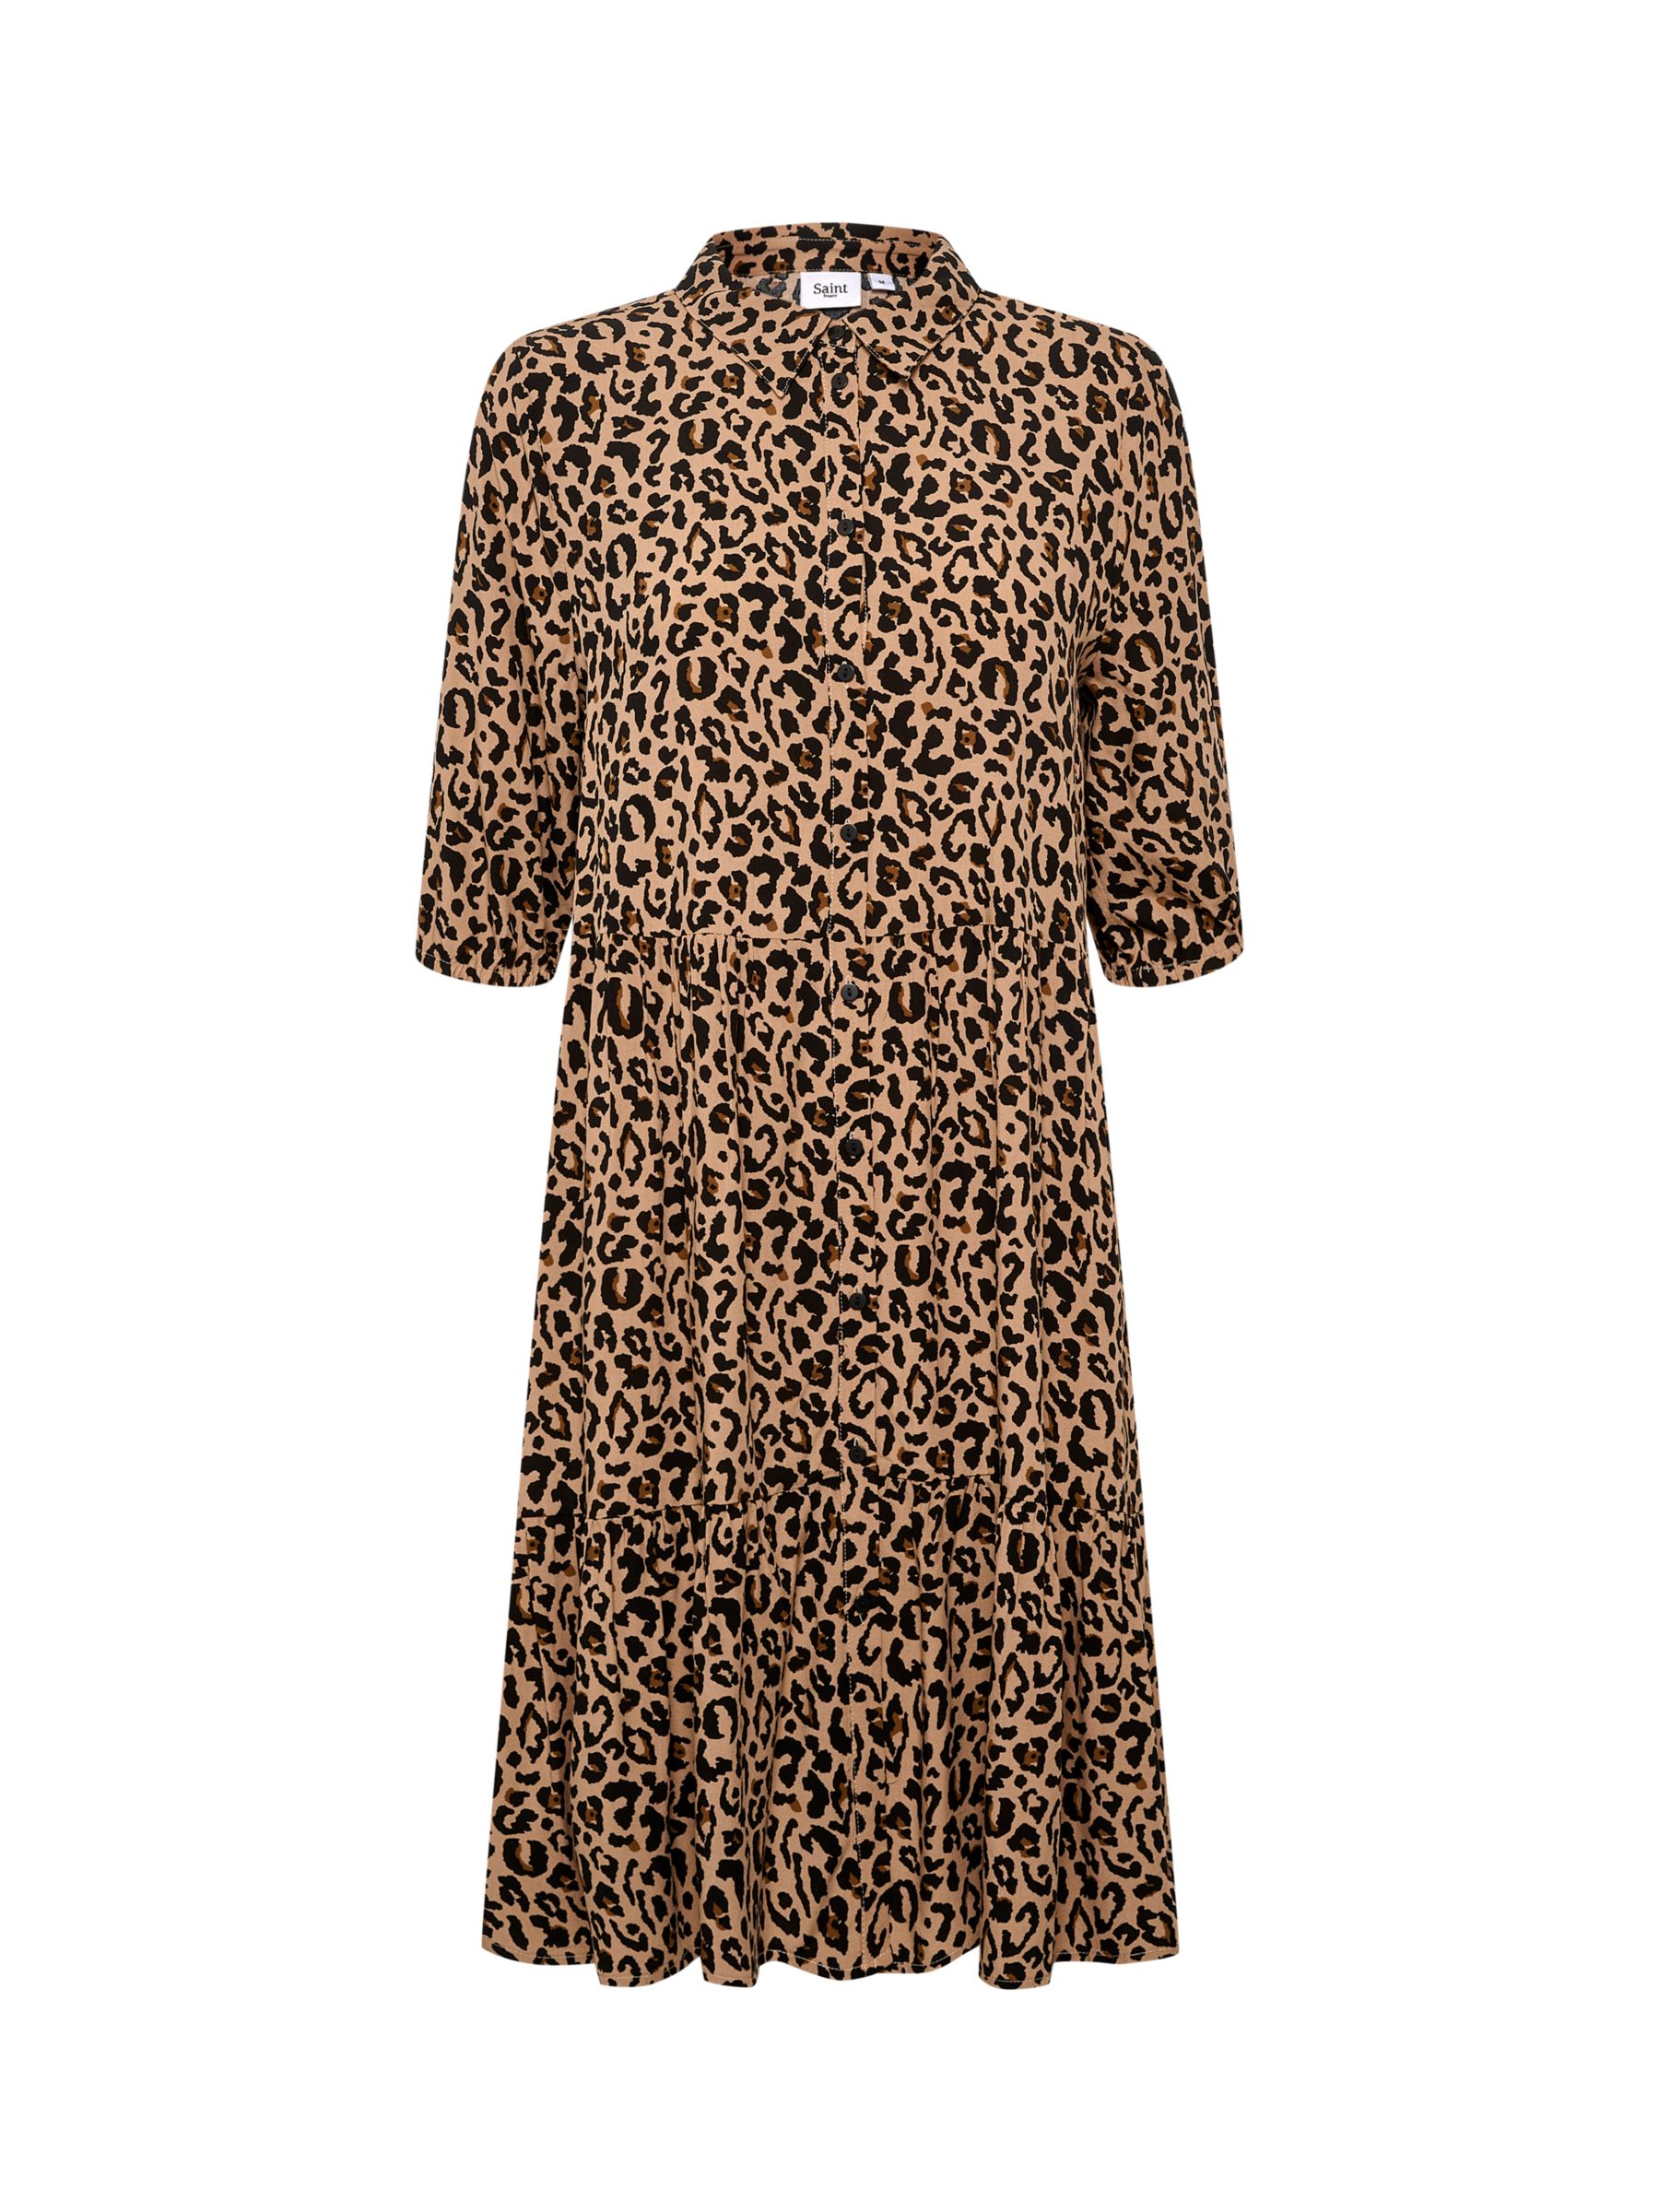 Saint Tropez Ueda 3/4 Sleeve Shirt Dress, Brown/Multi, XS